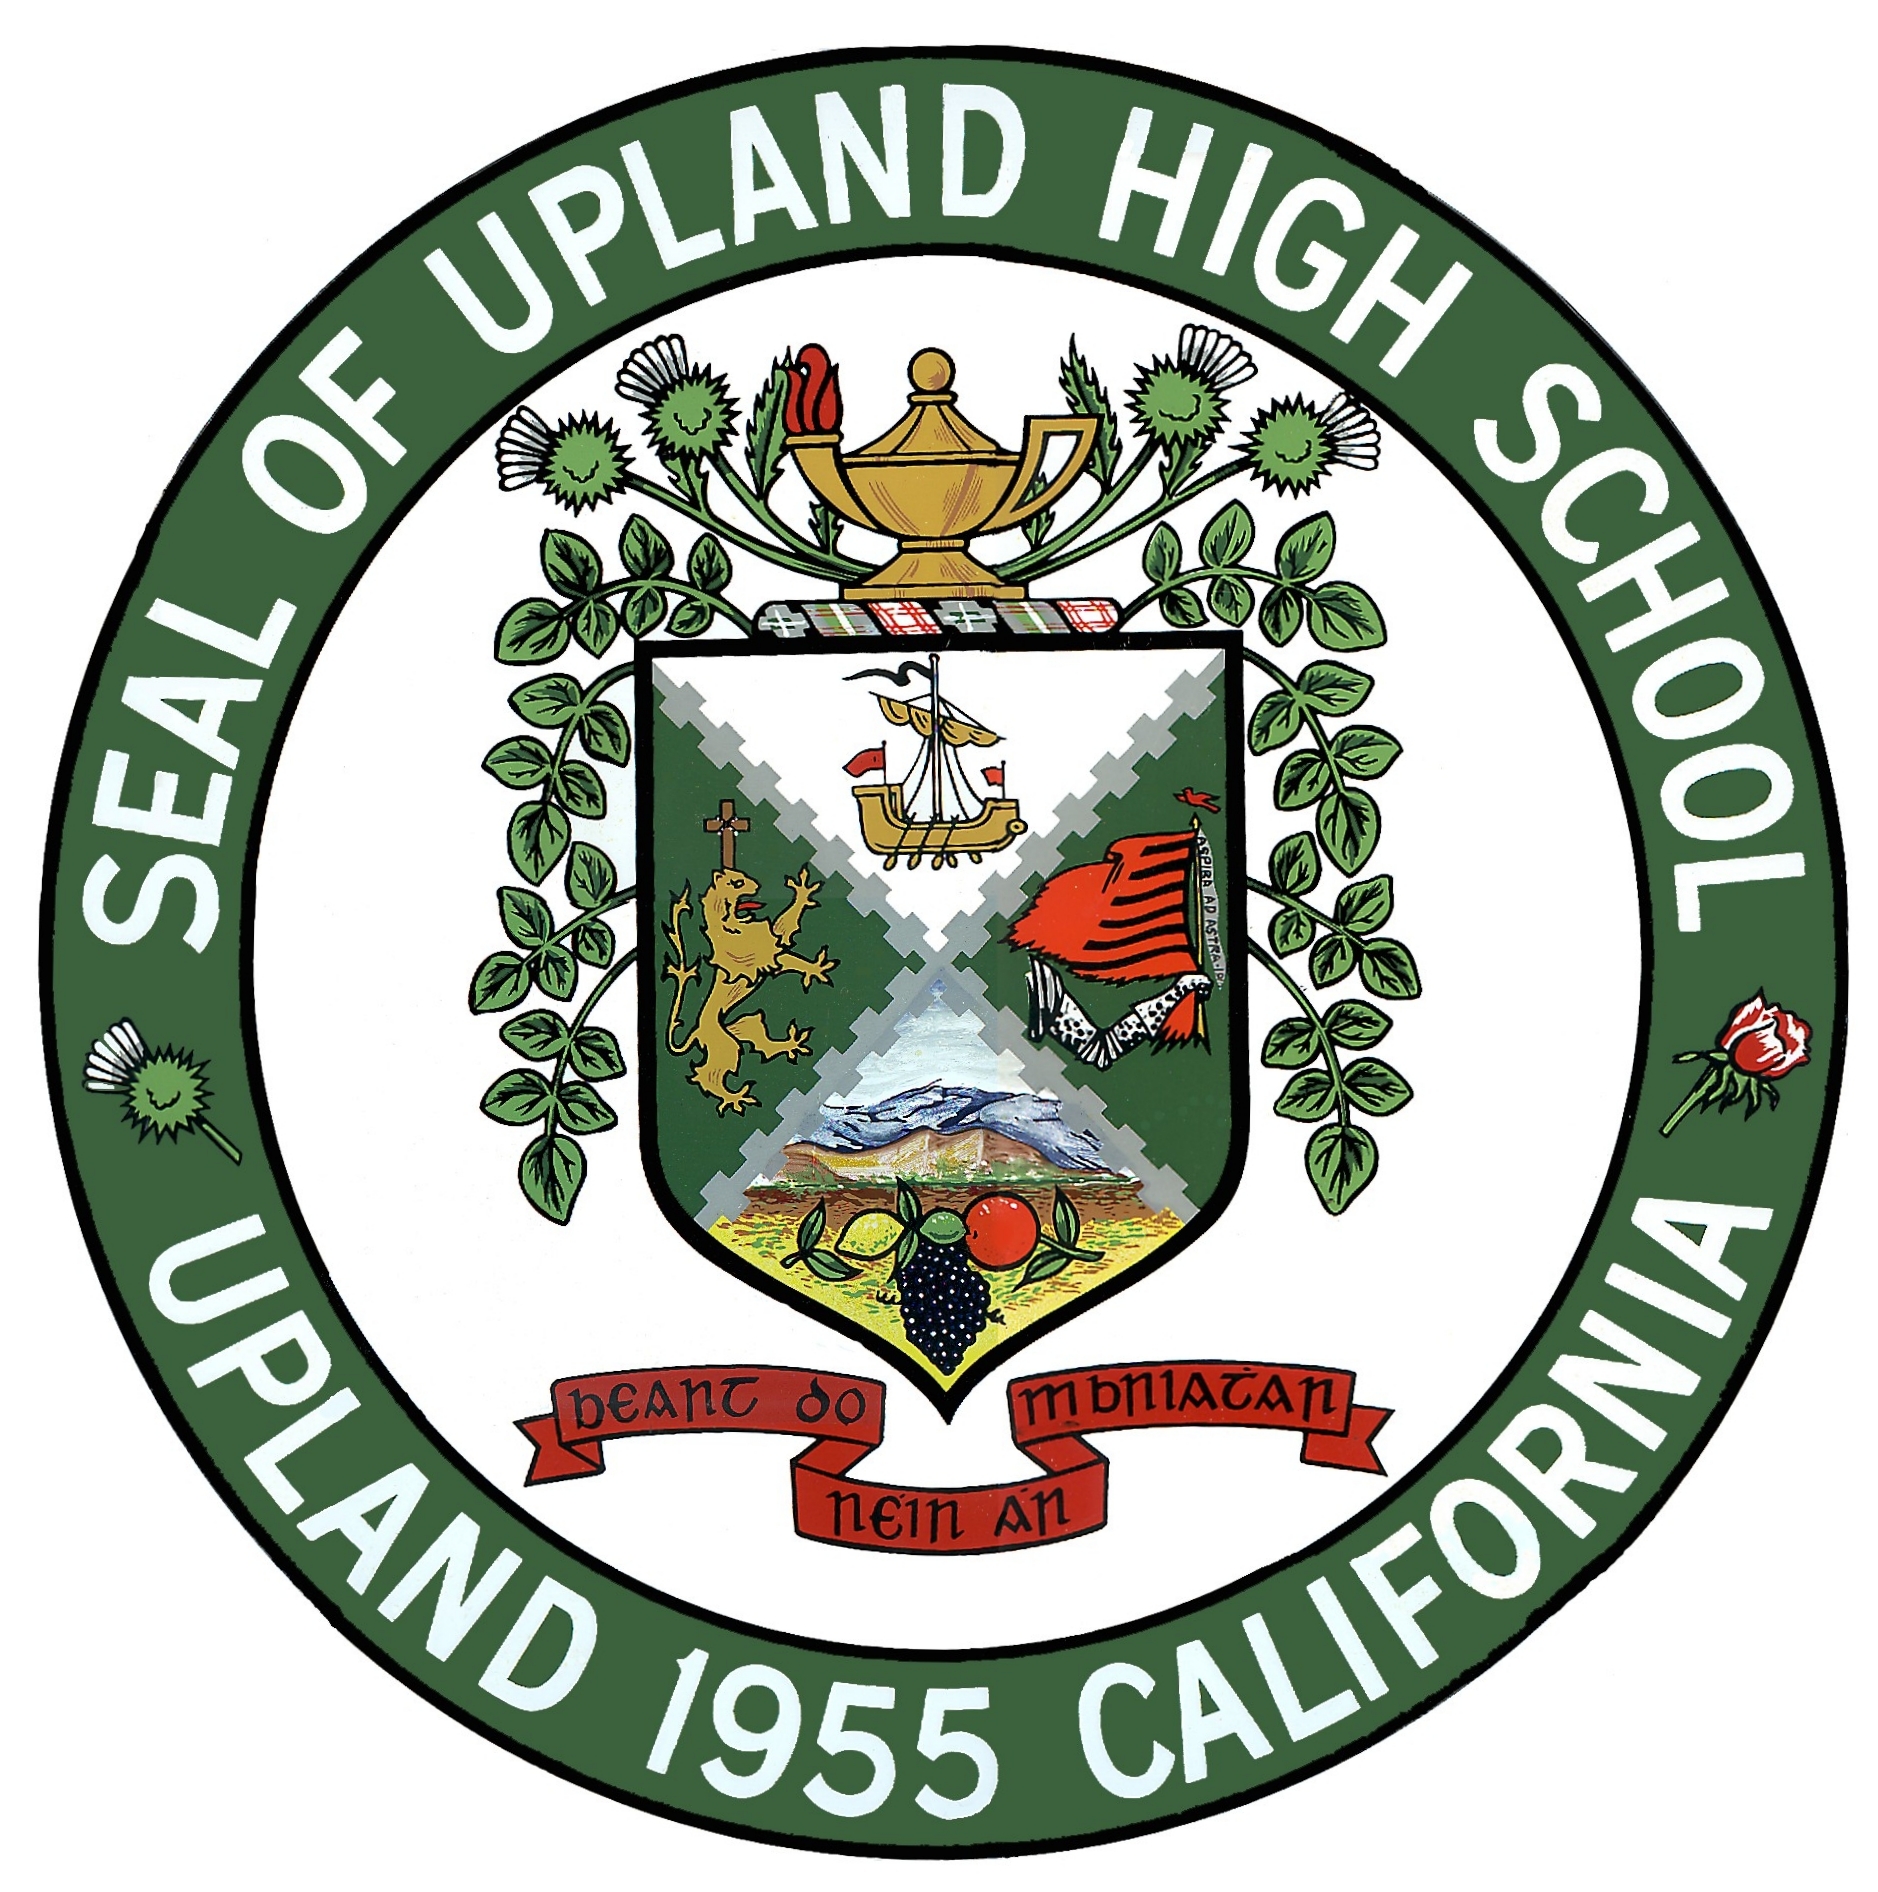 Upland High School